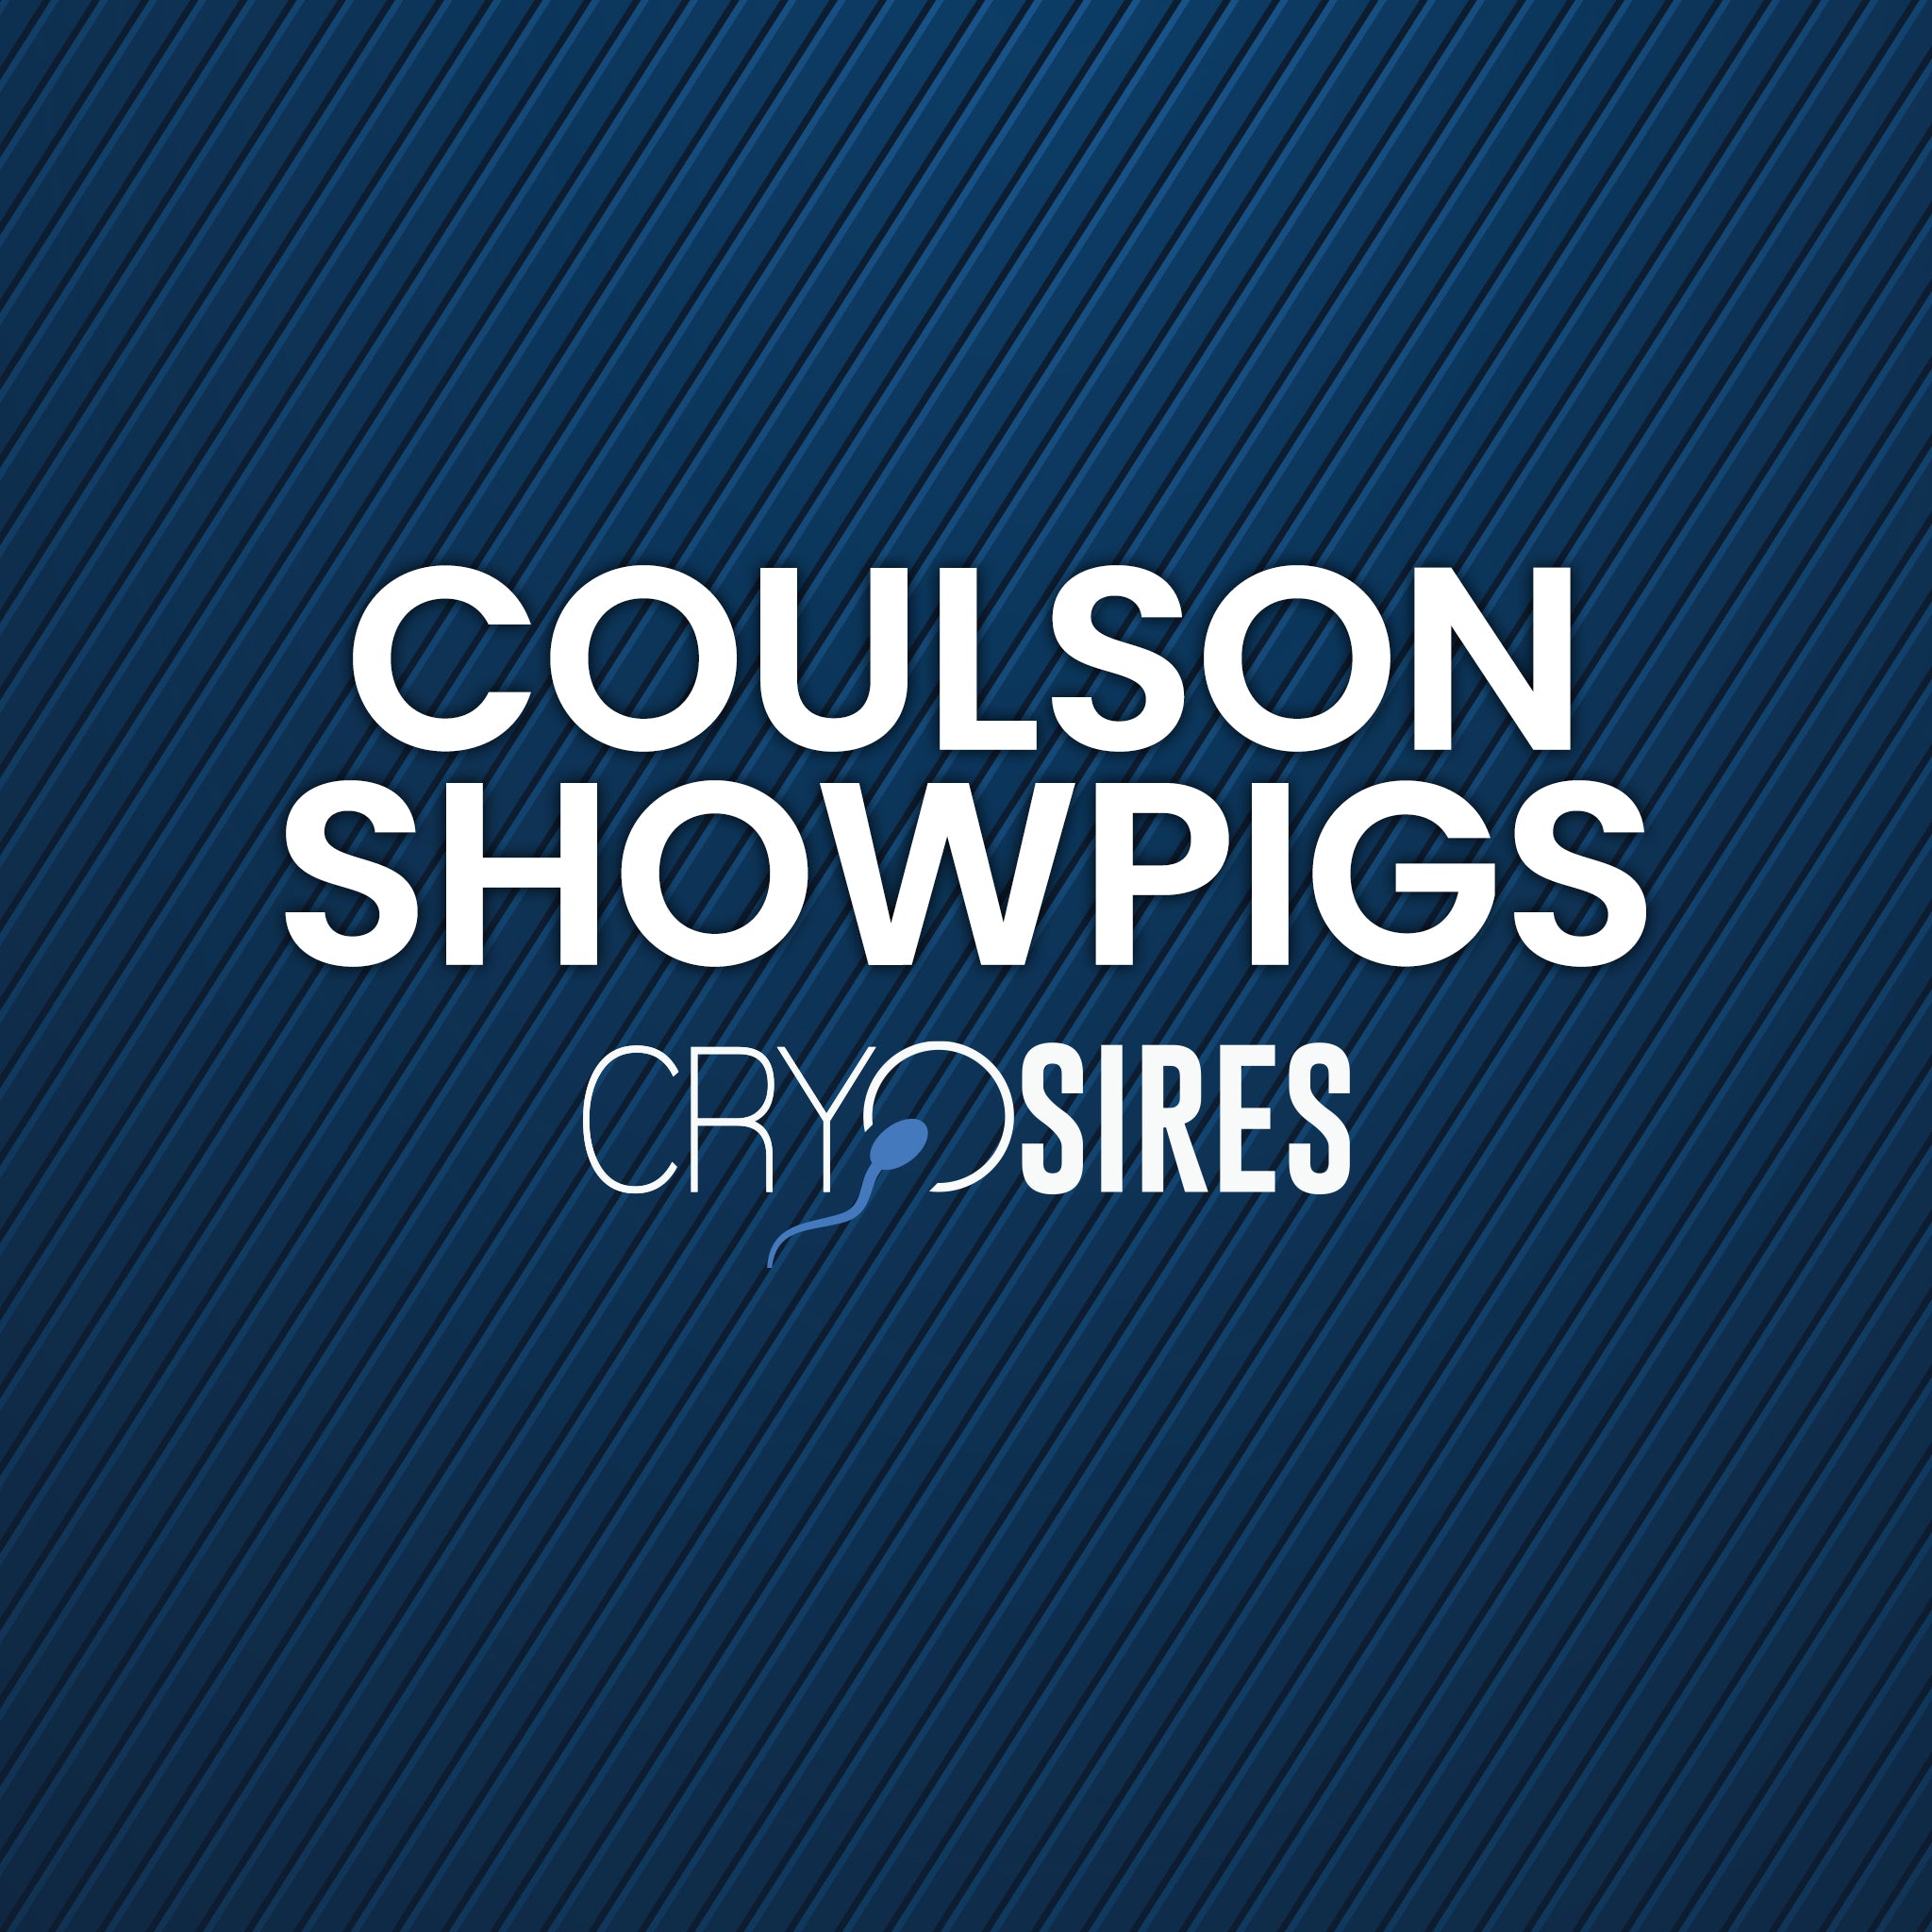 Coulson Showpigs